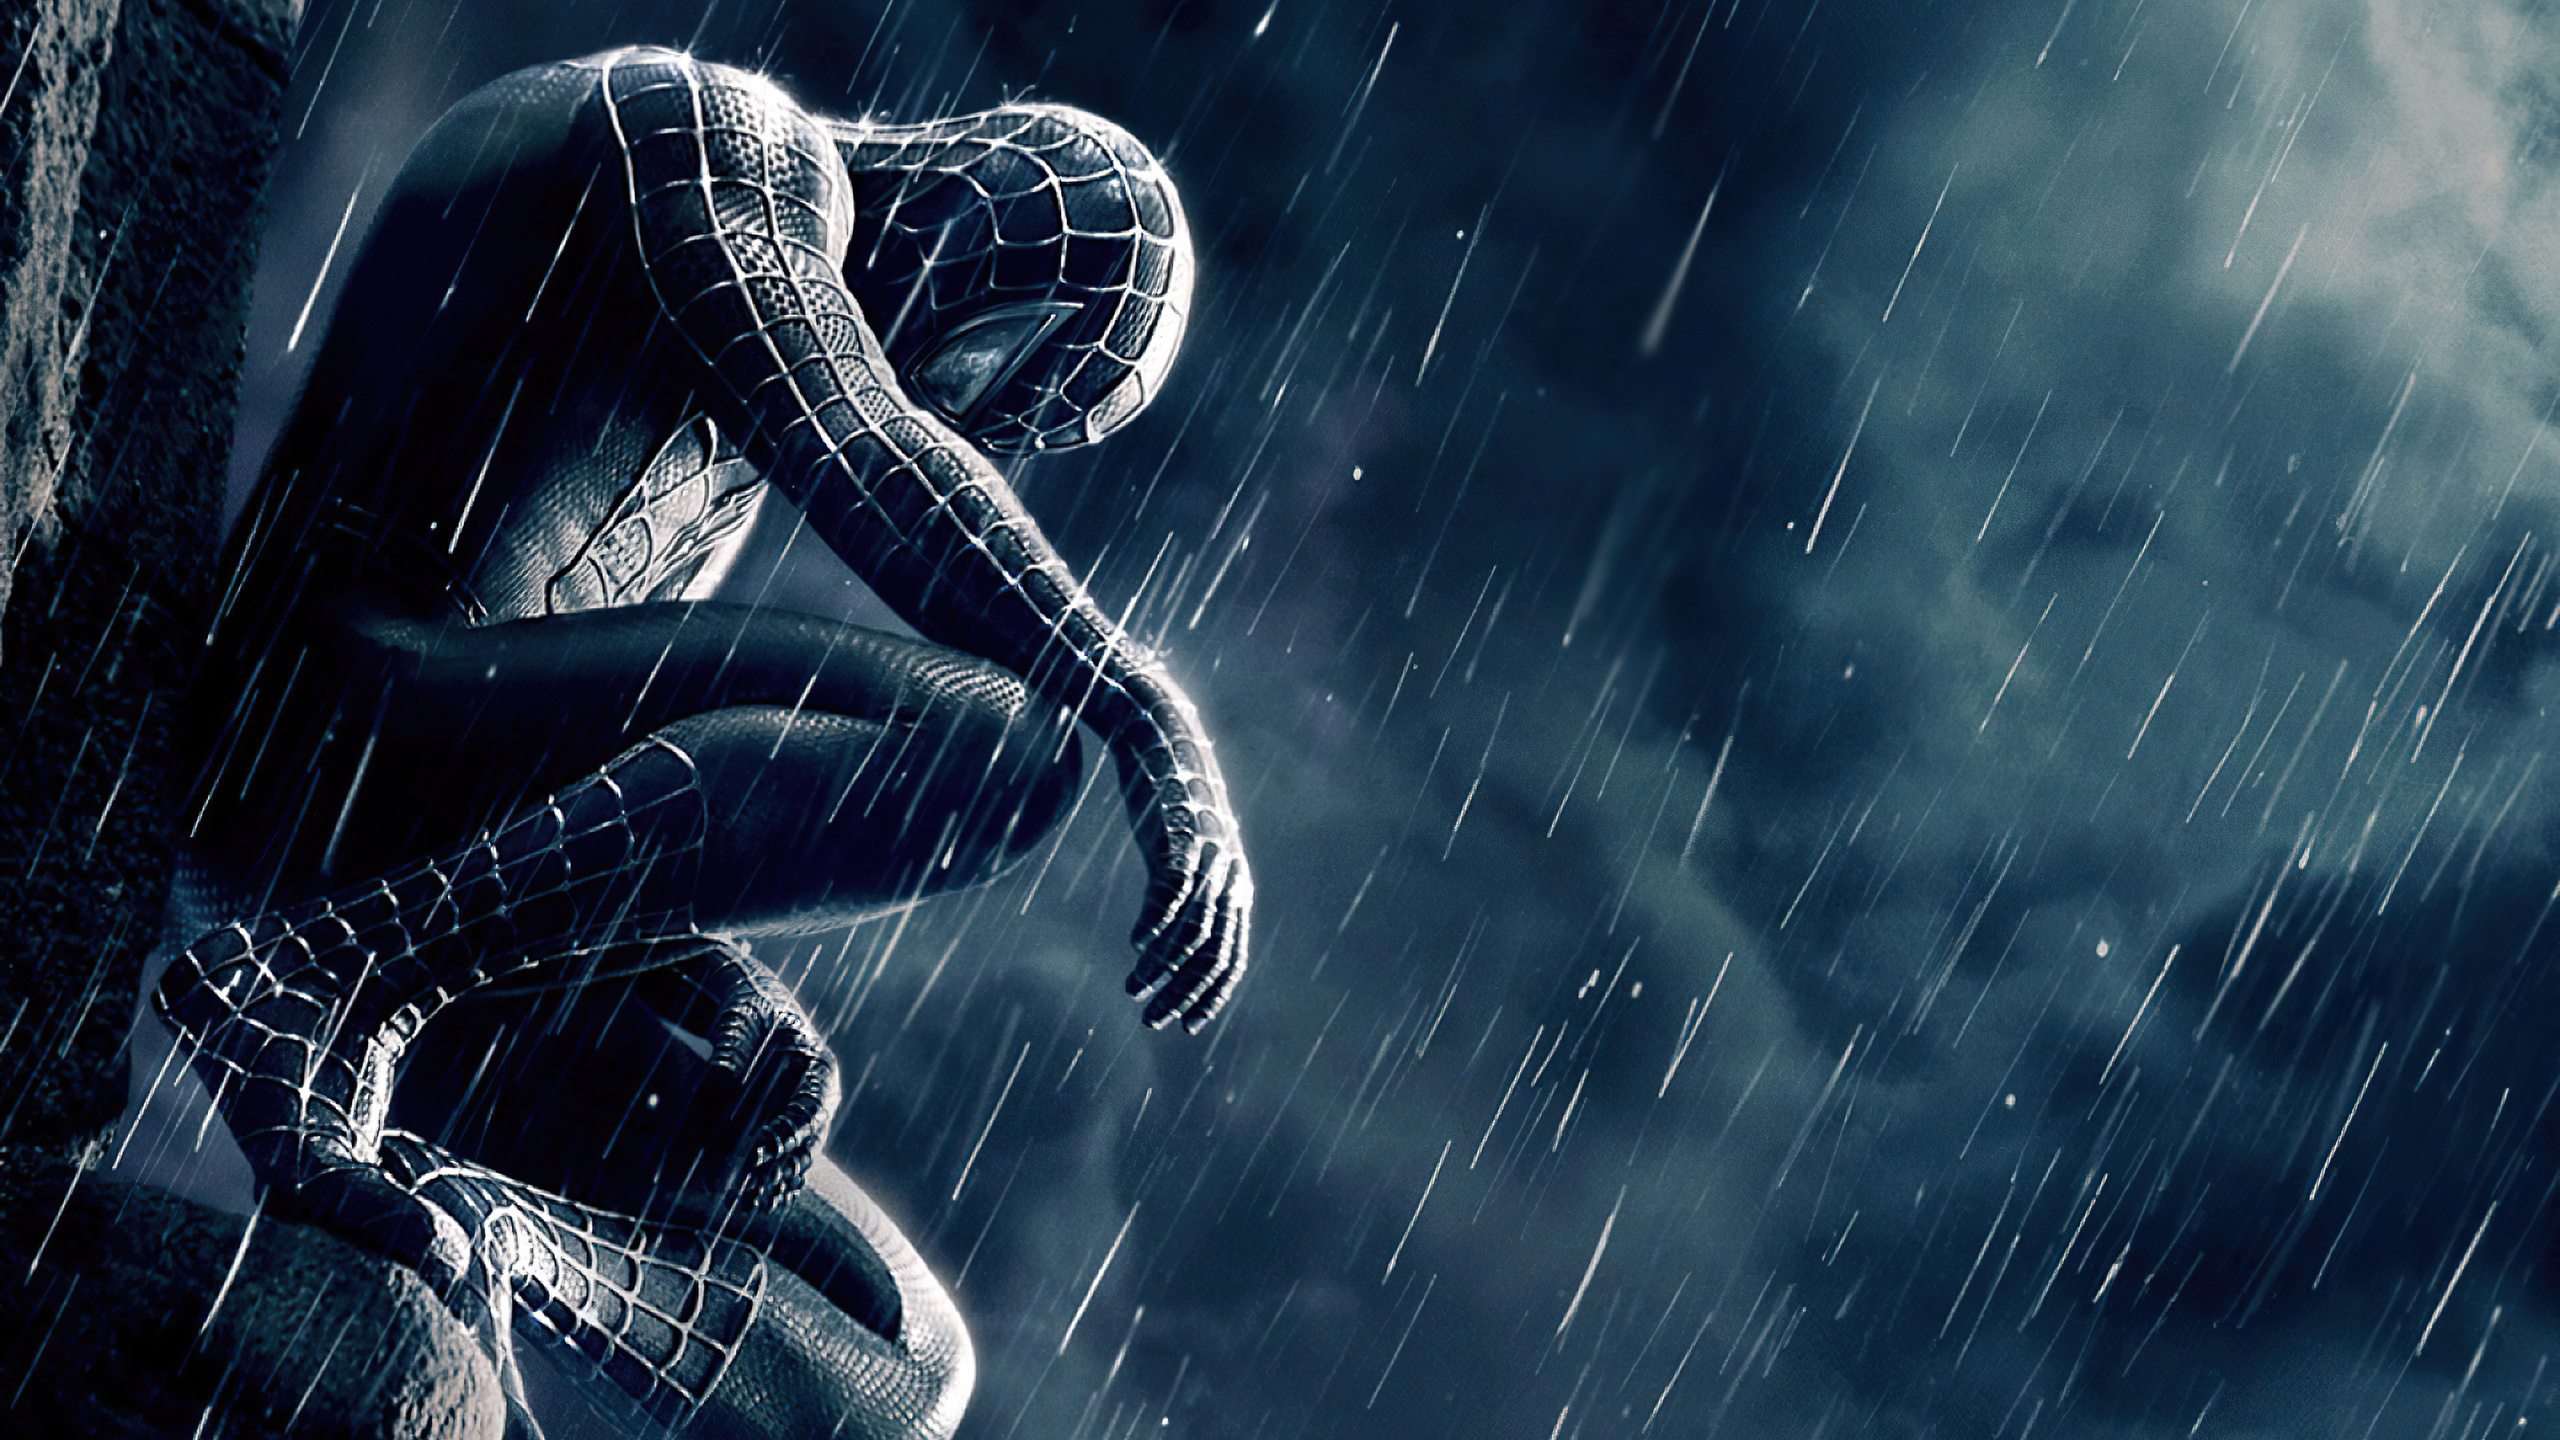 Black Spider-Man, 1440p resolution, HD and 4K wallpapers, 2560x1440 HD Desktop